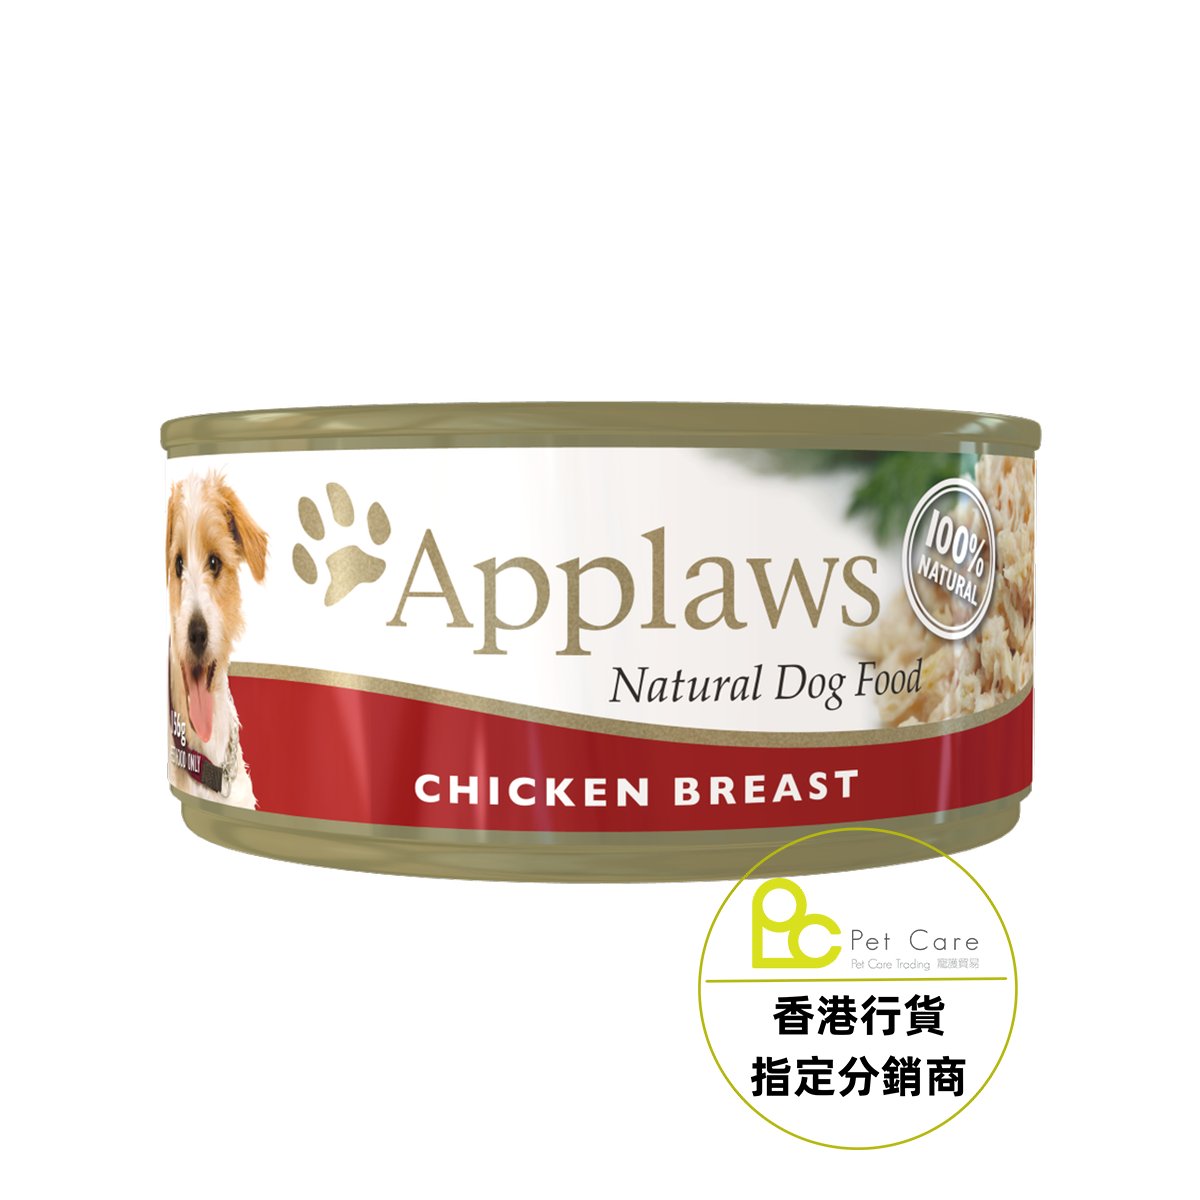 Applaws Dog 全天然 狗罐頭 - 雞柳 156g - 幸福站